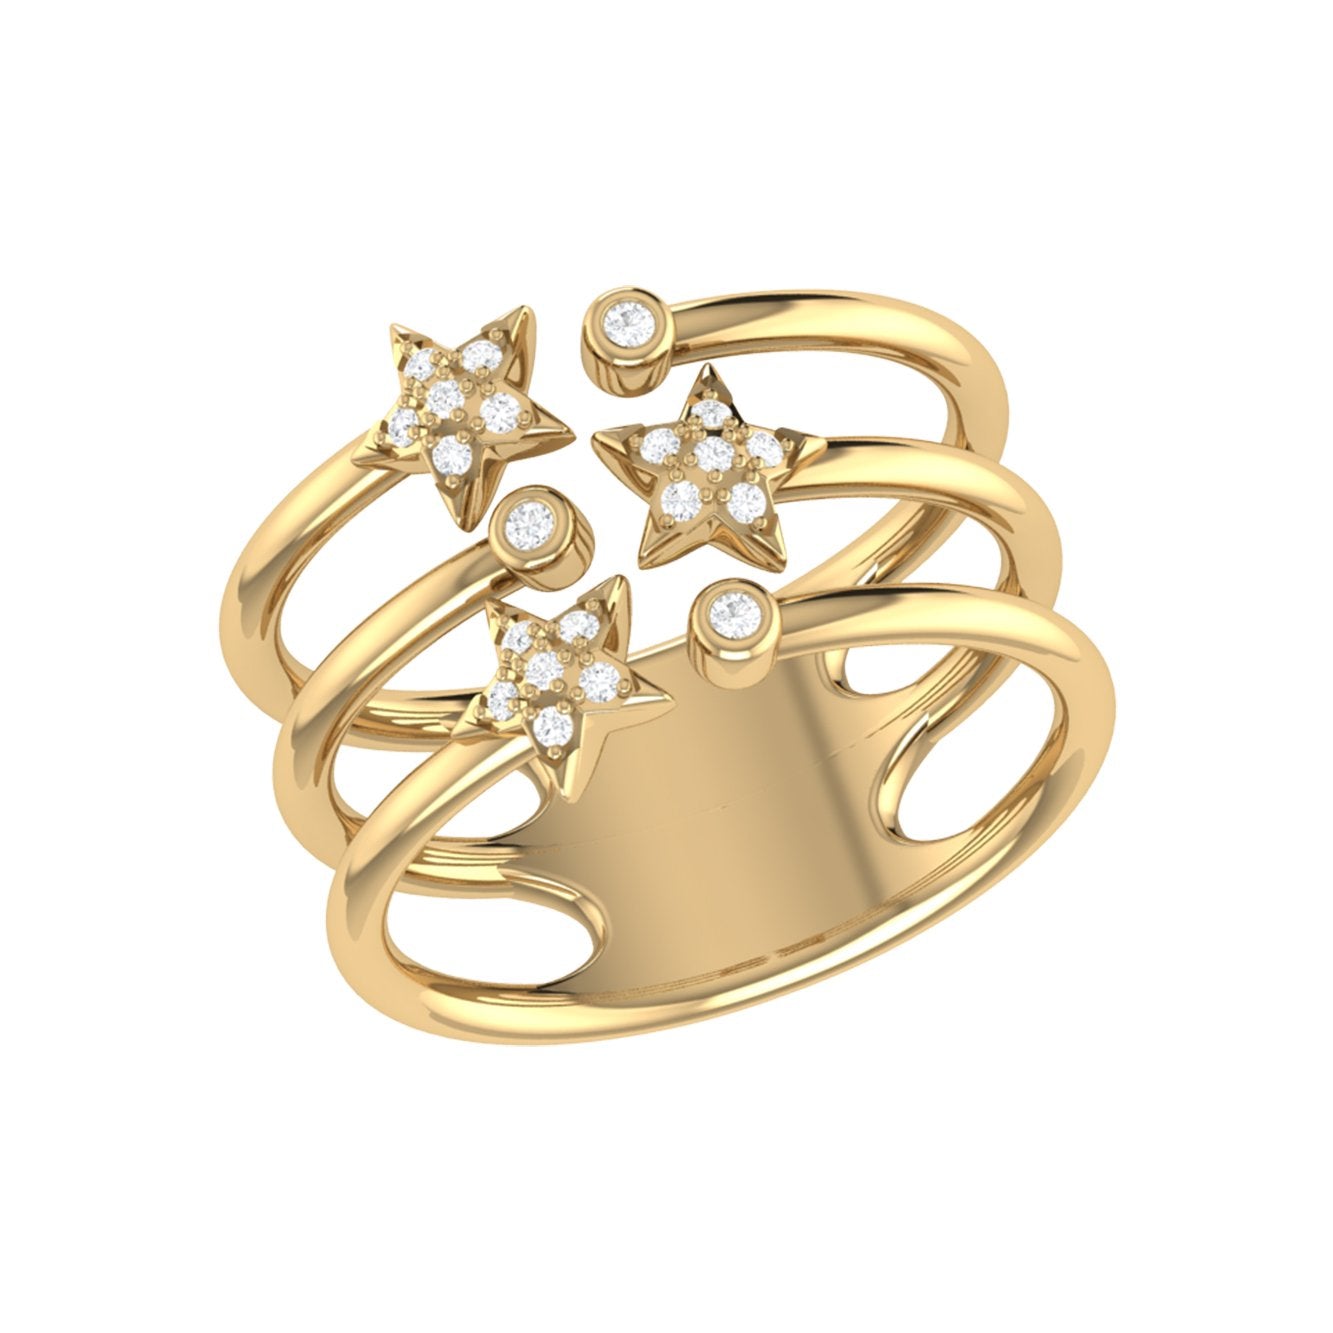 Dazzling Star Bezel Trio Diamond Ring in 14K Yellow Gold Vermeil - 100% Natural Diamonds, Custom Sizes, Handmade Bijou Her